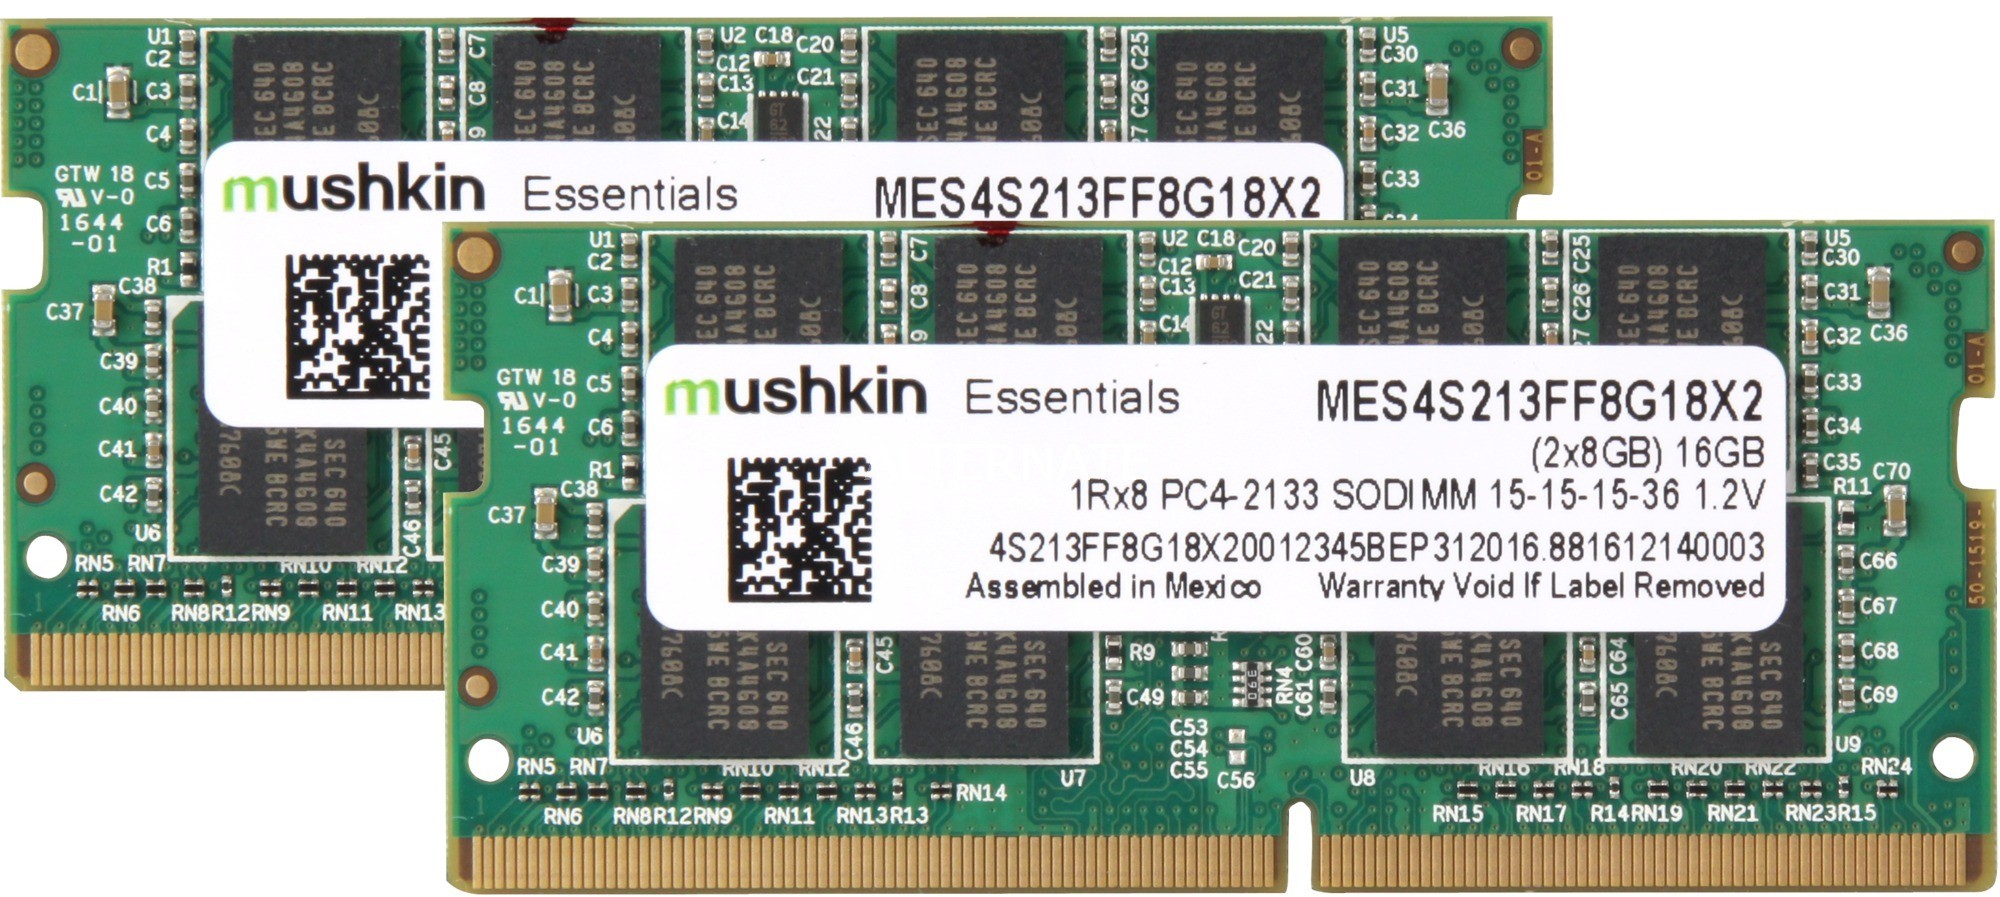 Mushkin 16GB MES4S213FF8G18X2 DDR4